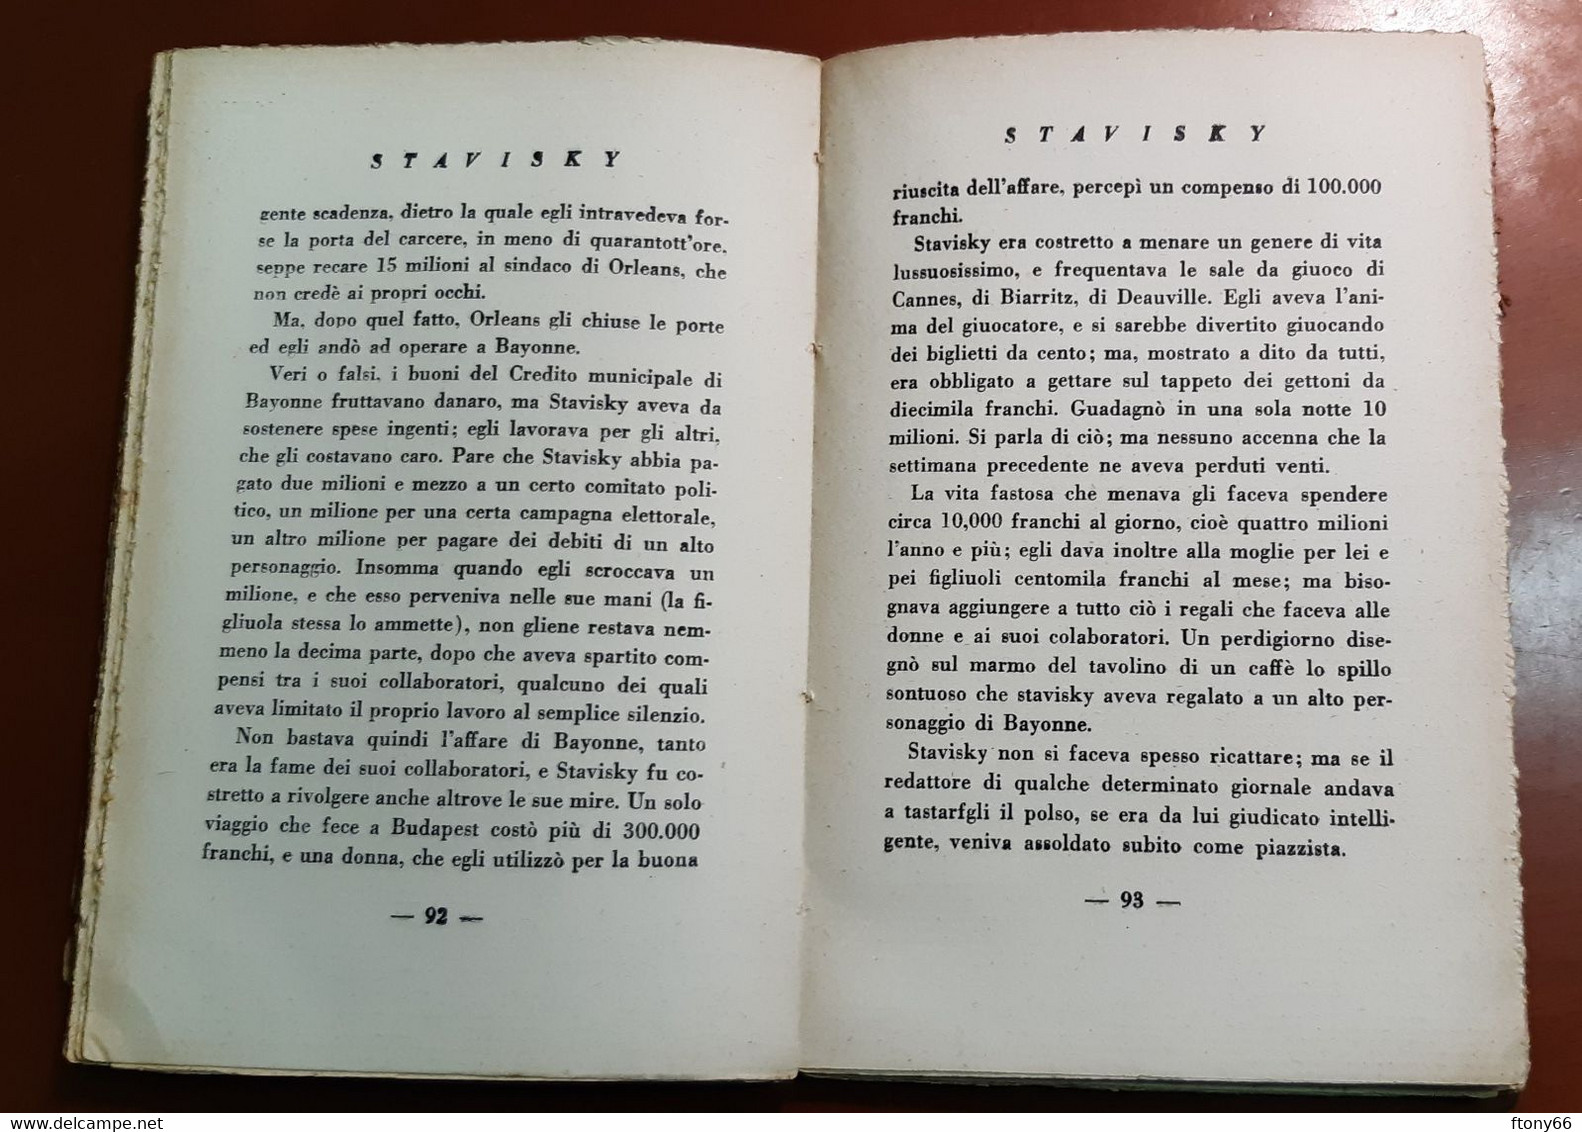 MA21 Francesco Palumbo "STAVINSKY" - Edizione Ultra, 1934 1^ Edizione - Old